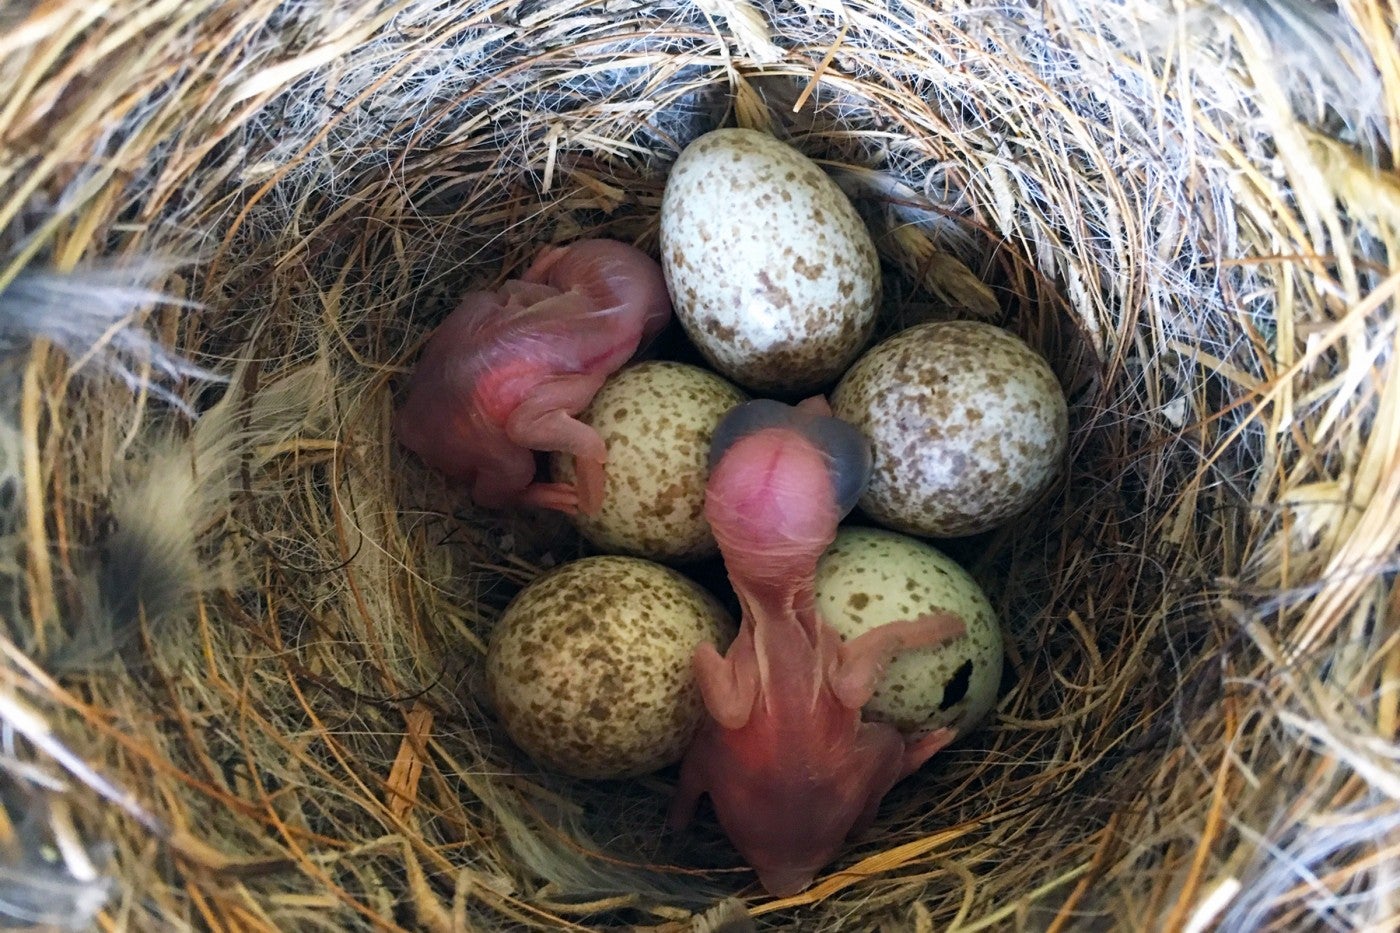 Loggerhead shrike chicks and eggs in a nest. 